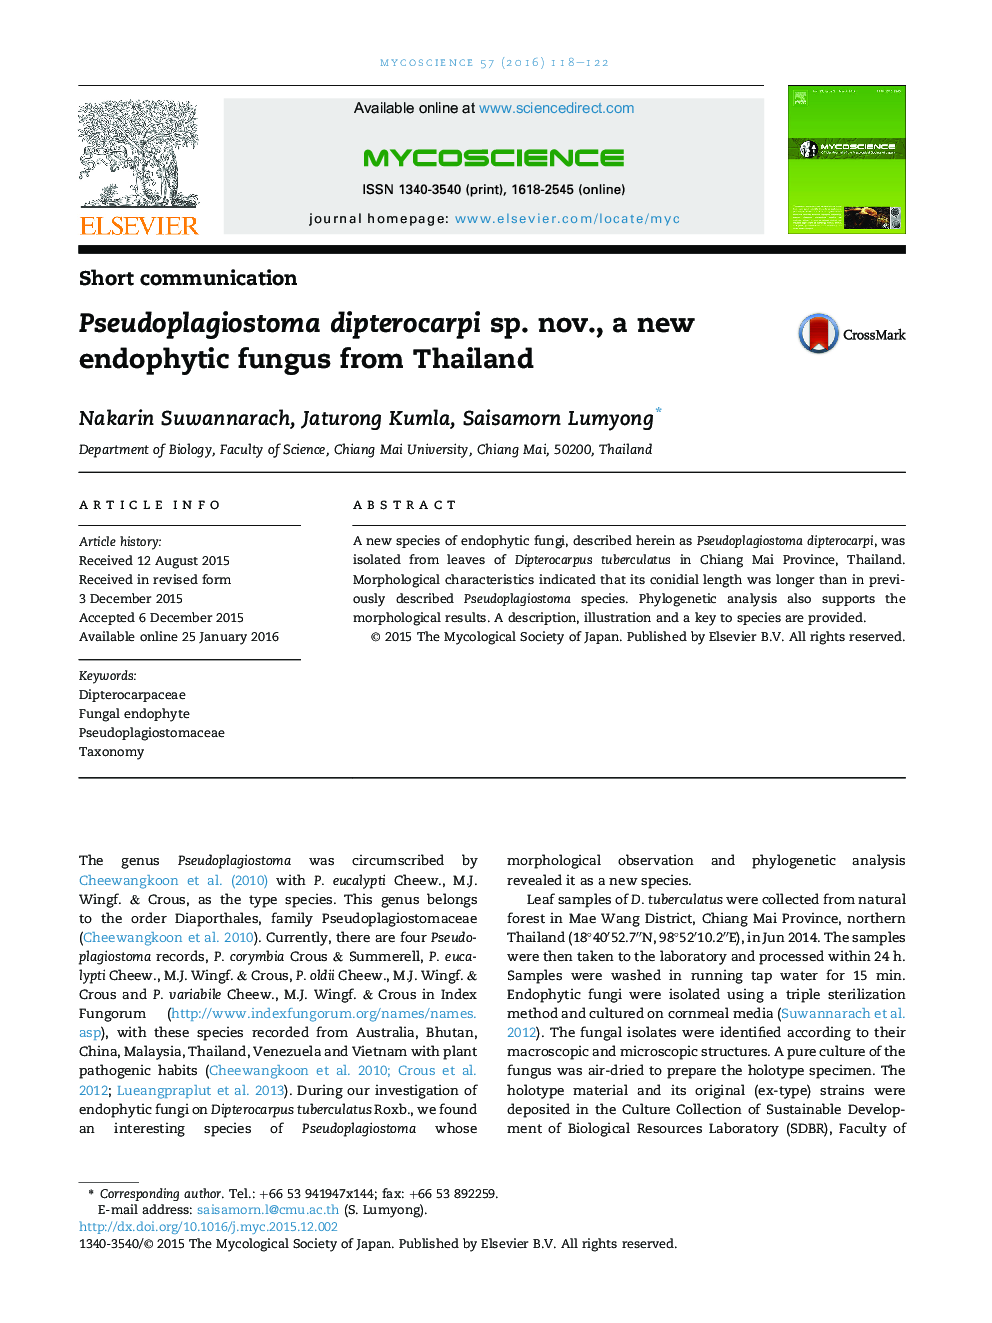 Pseudoplagiostoma dipterocarpi sp. Nov. یک قارچ اندوفیت جدید از تایلند